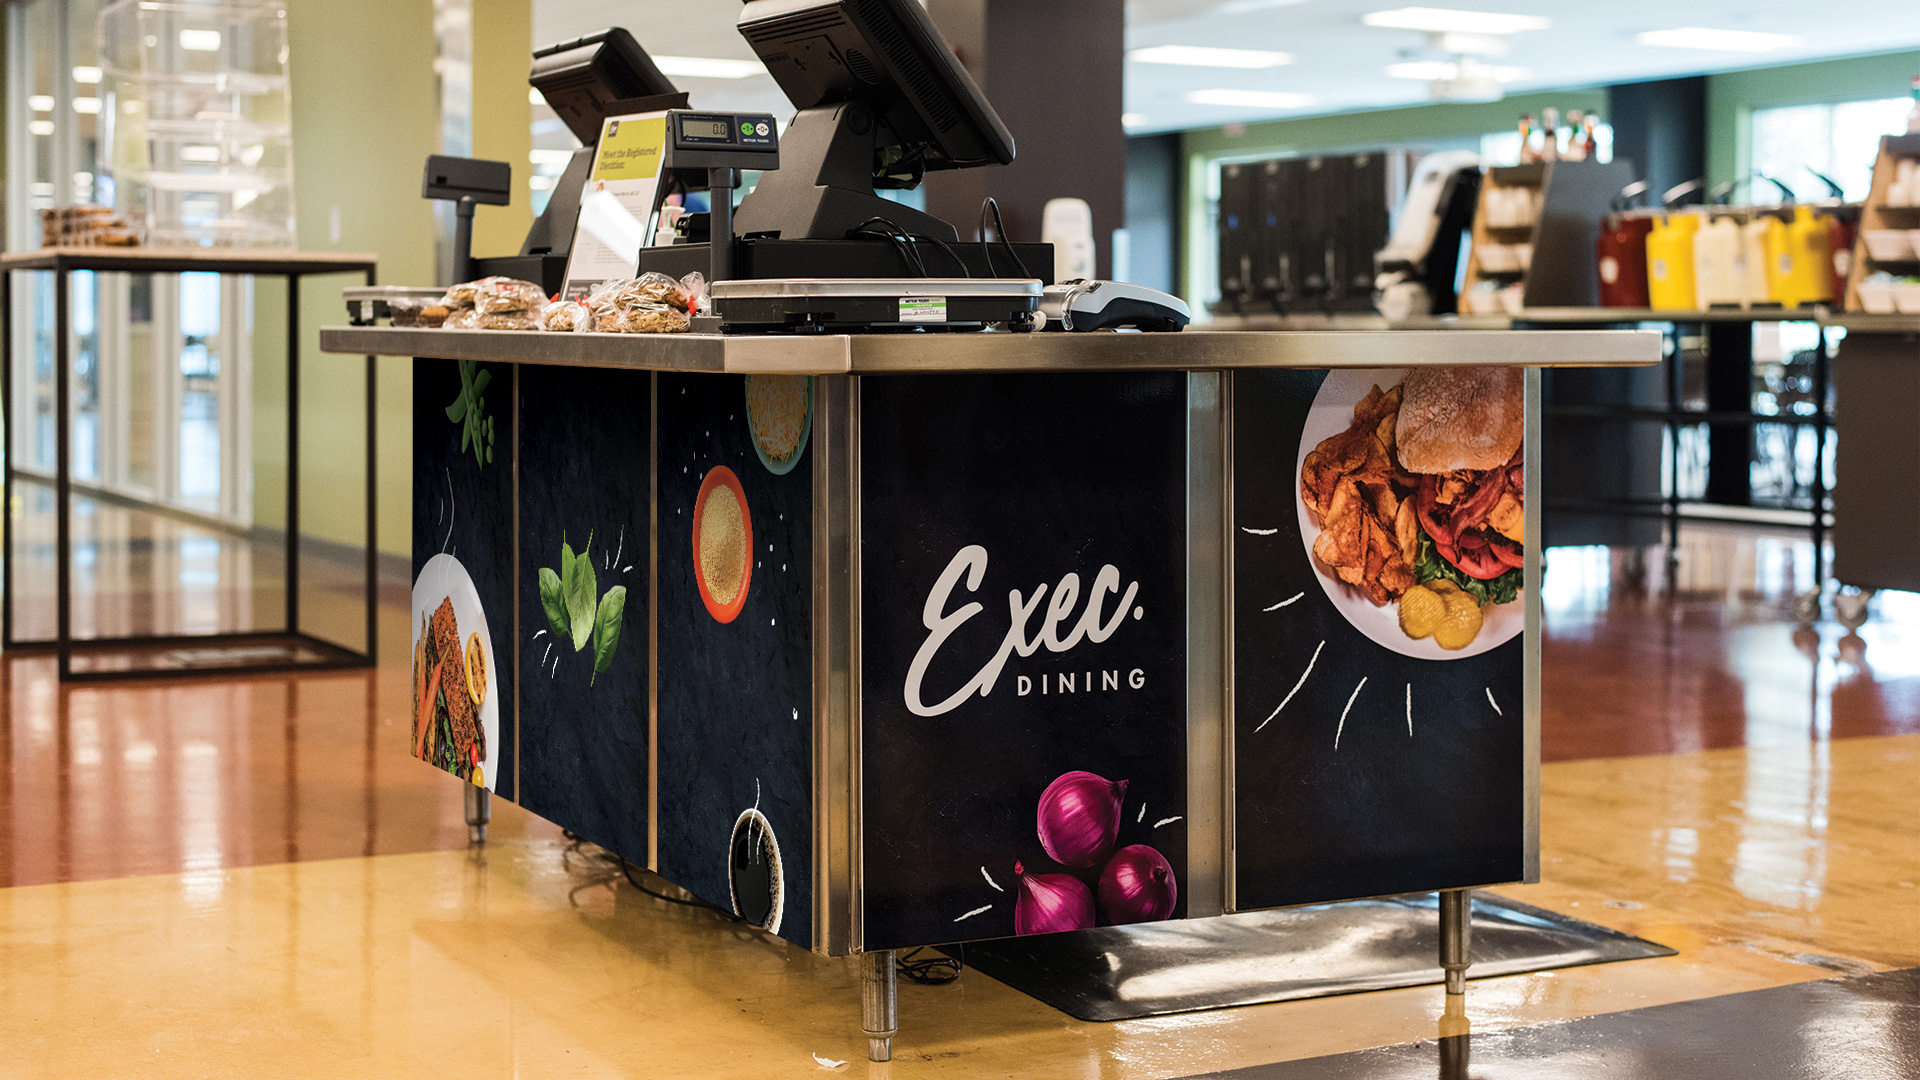 We designed custom branded kiosks for Executive Dining 